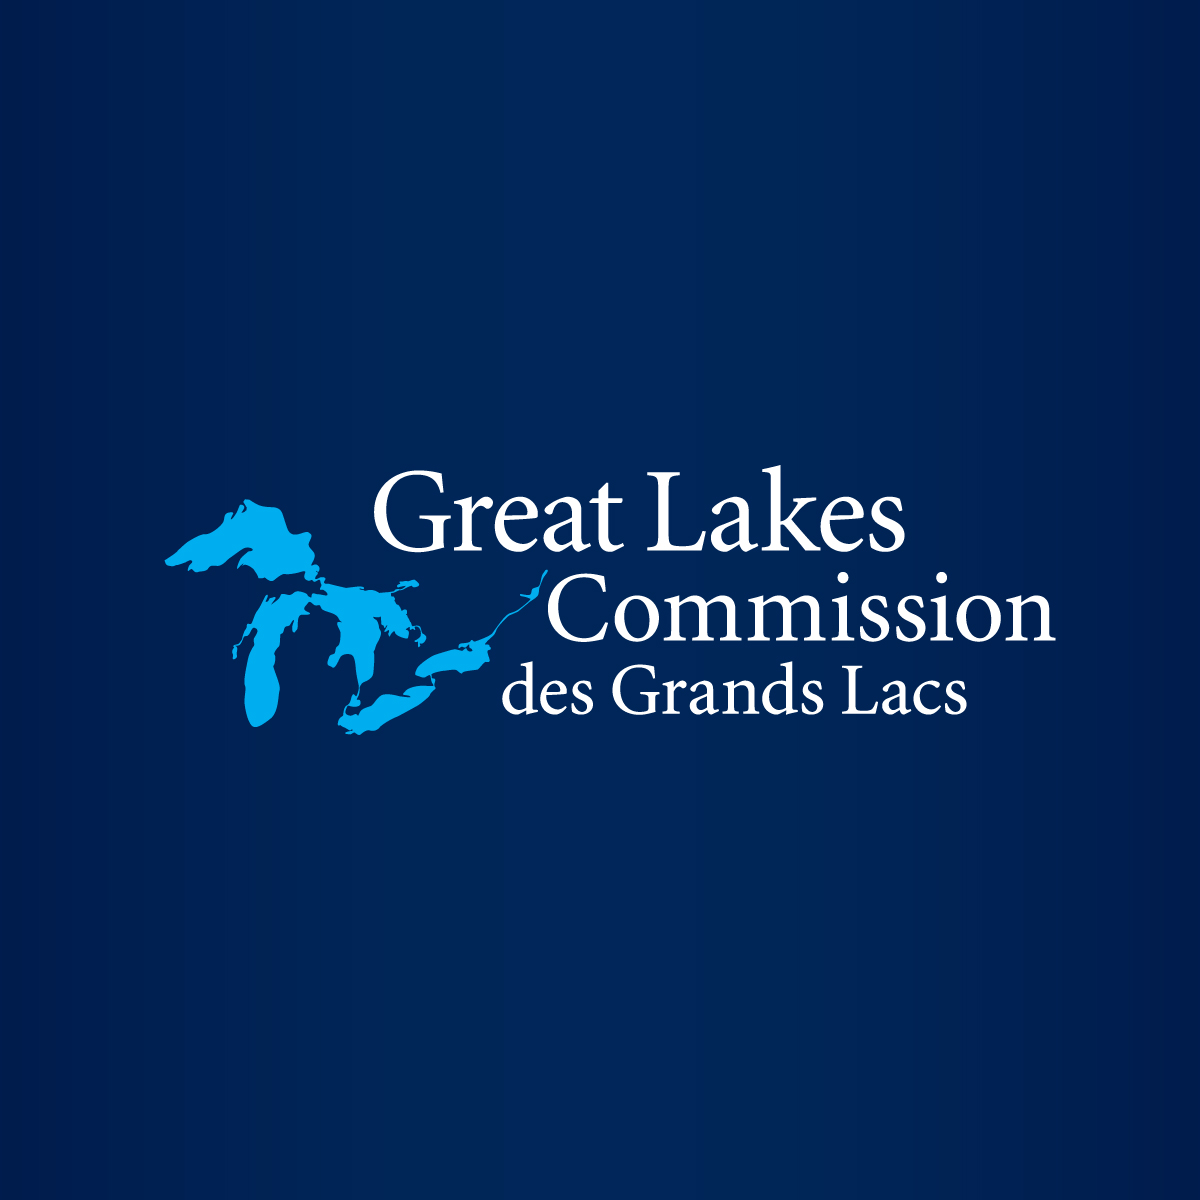 10 shoreline horseback riding underway along lake michigan slots still available